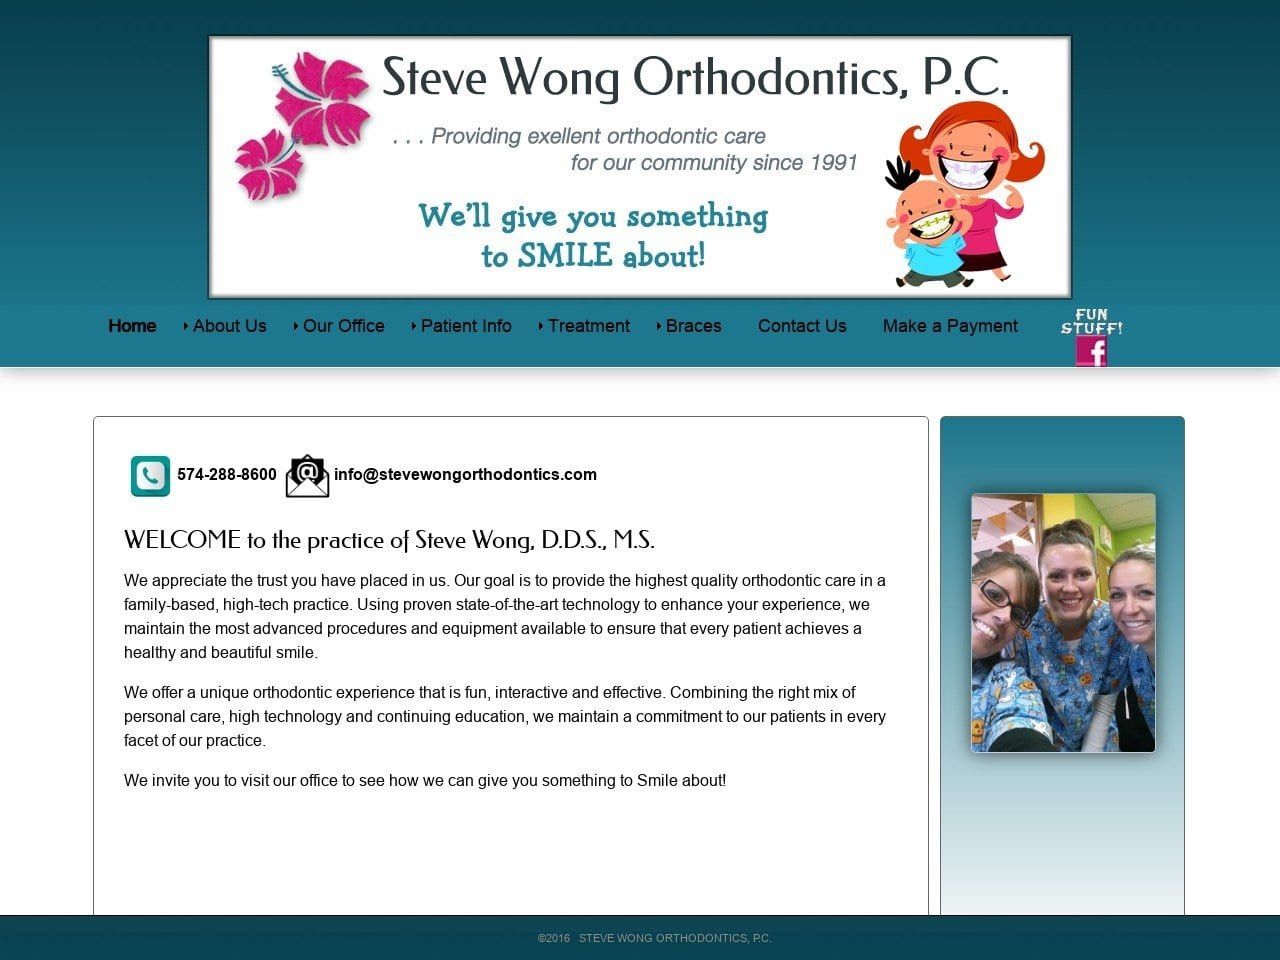 Steve Wong Orthodontics PC Website Screenshot from stevewongorthodontics.com